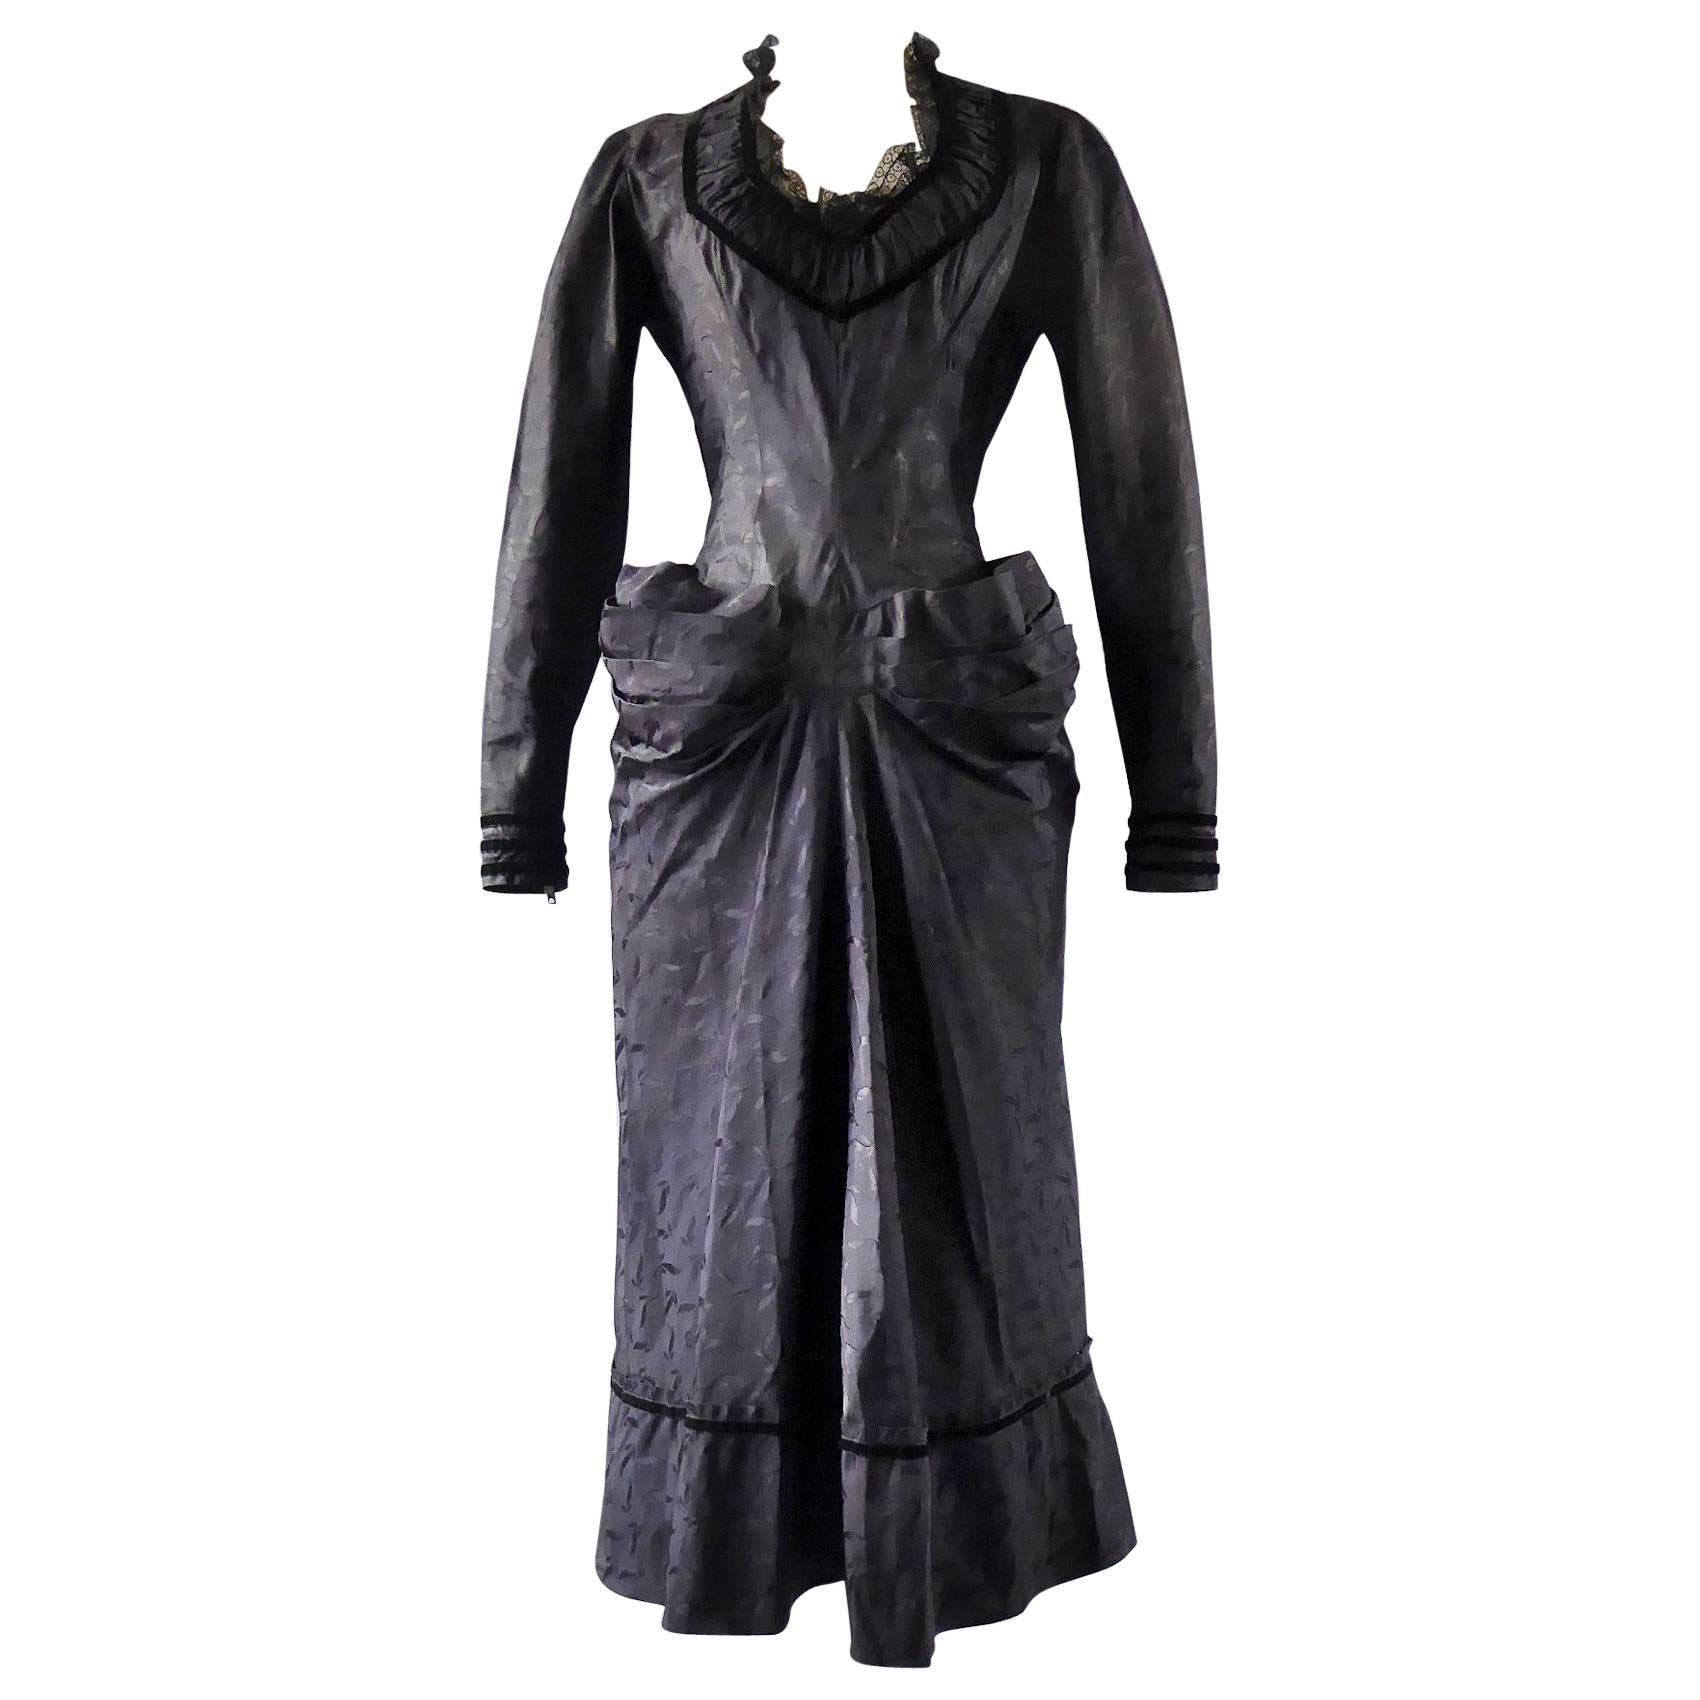 Jacques Heim Dress Haute Couture Circa 1950